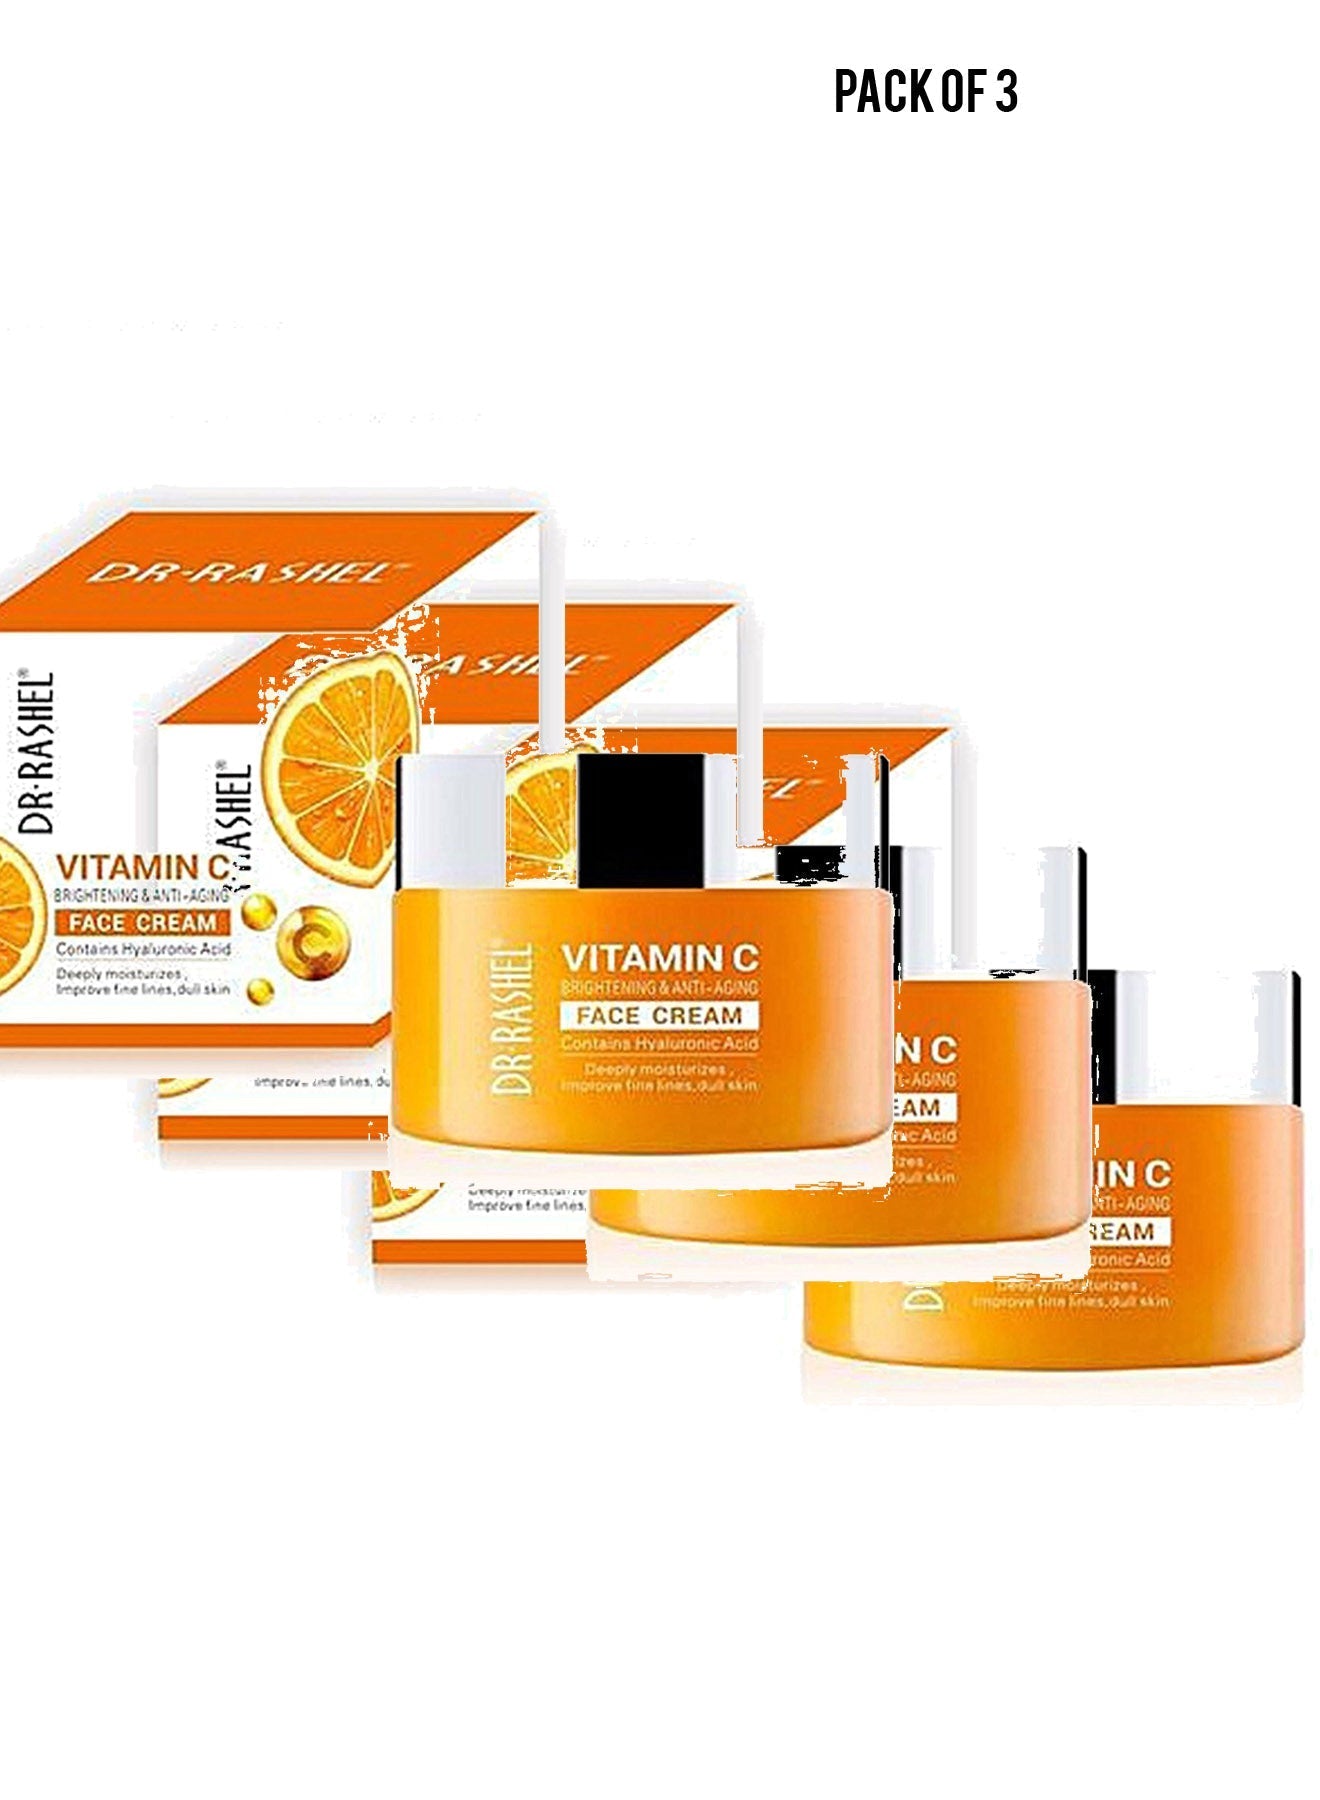 Dr Rashel Vitamin C Face Cream 50g Value Pack of 3 